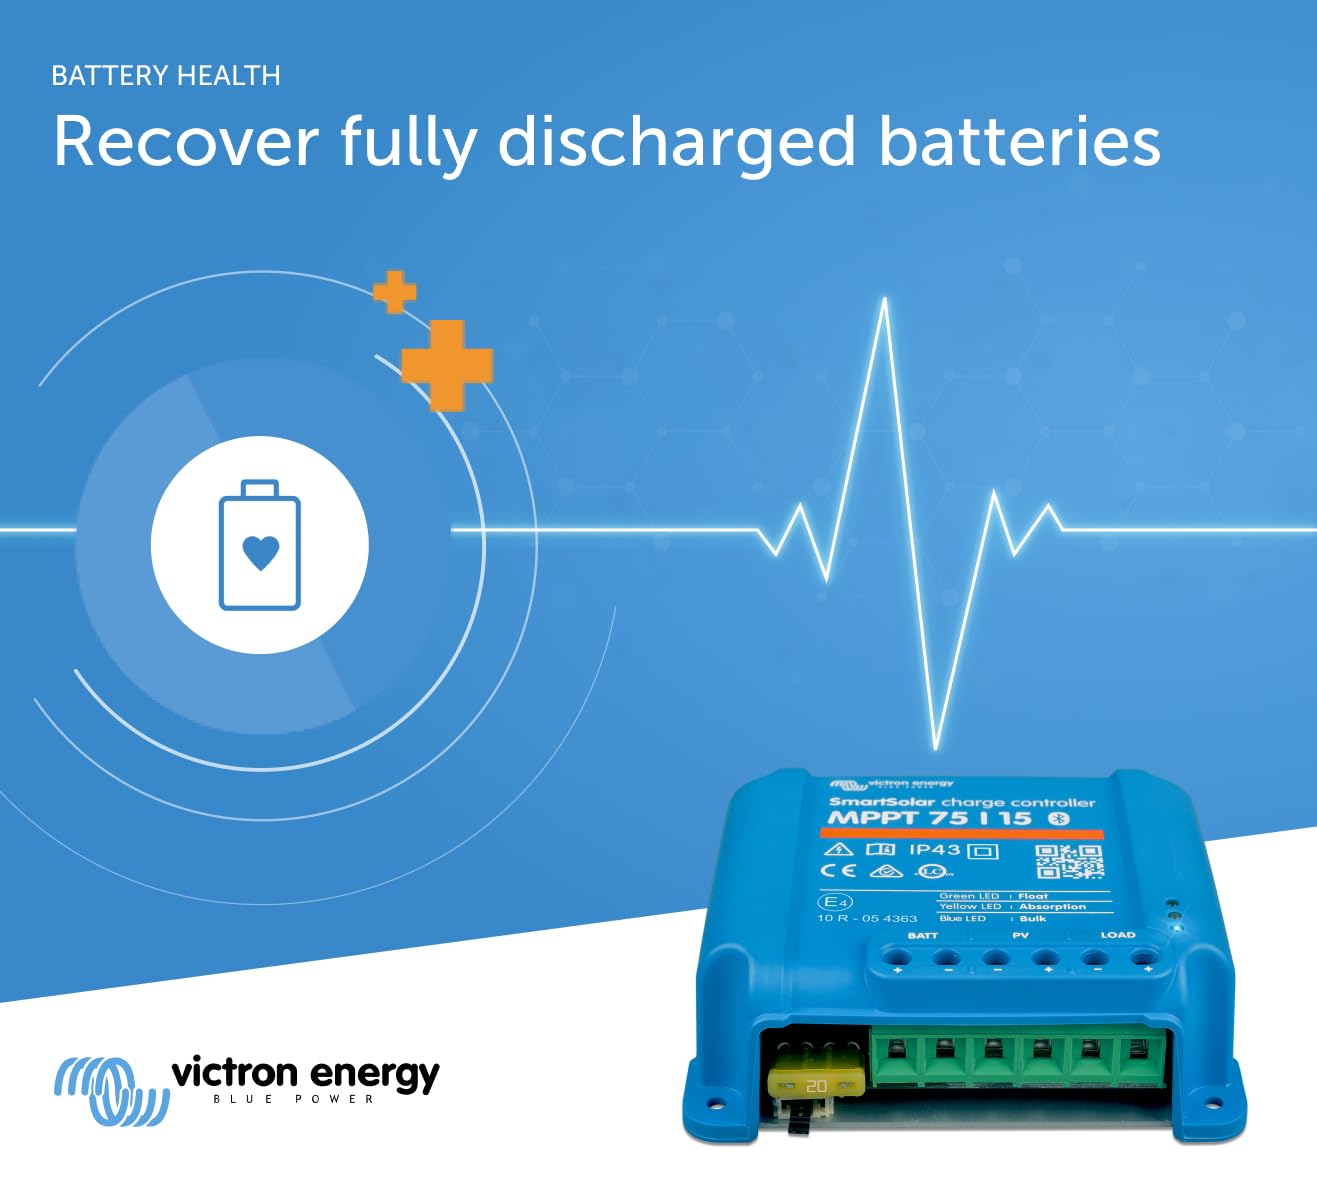 Victron Energy SmartSolar MPPT 75V 15 amp 12/24-Volt Solar Charge Controller (Bluetooth)